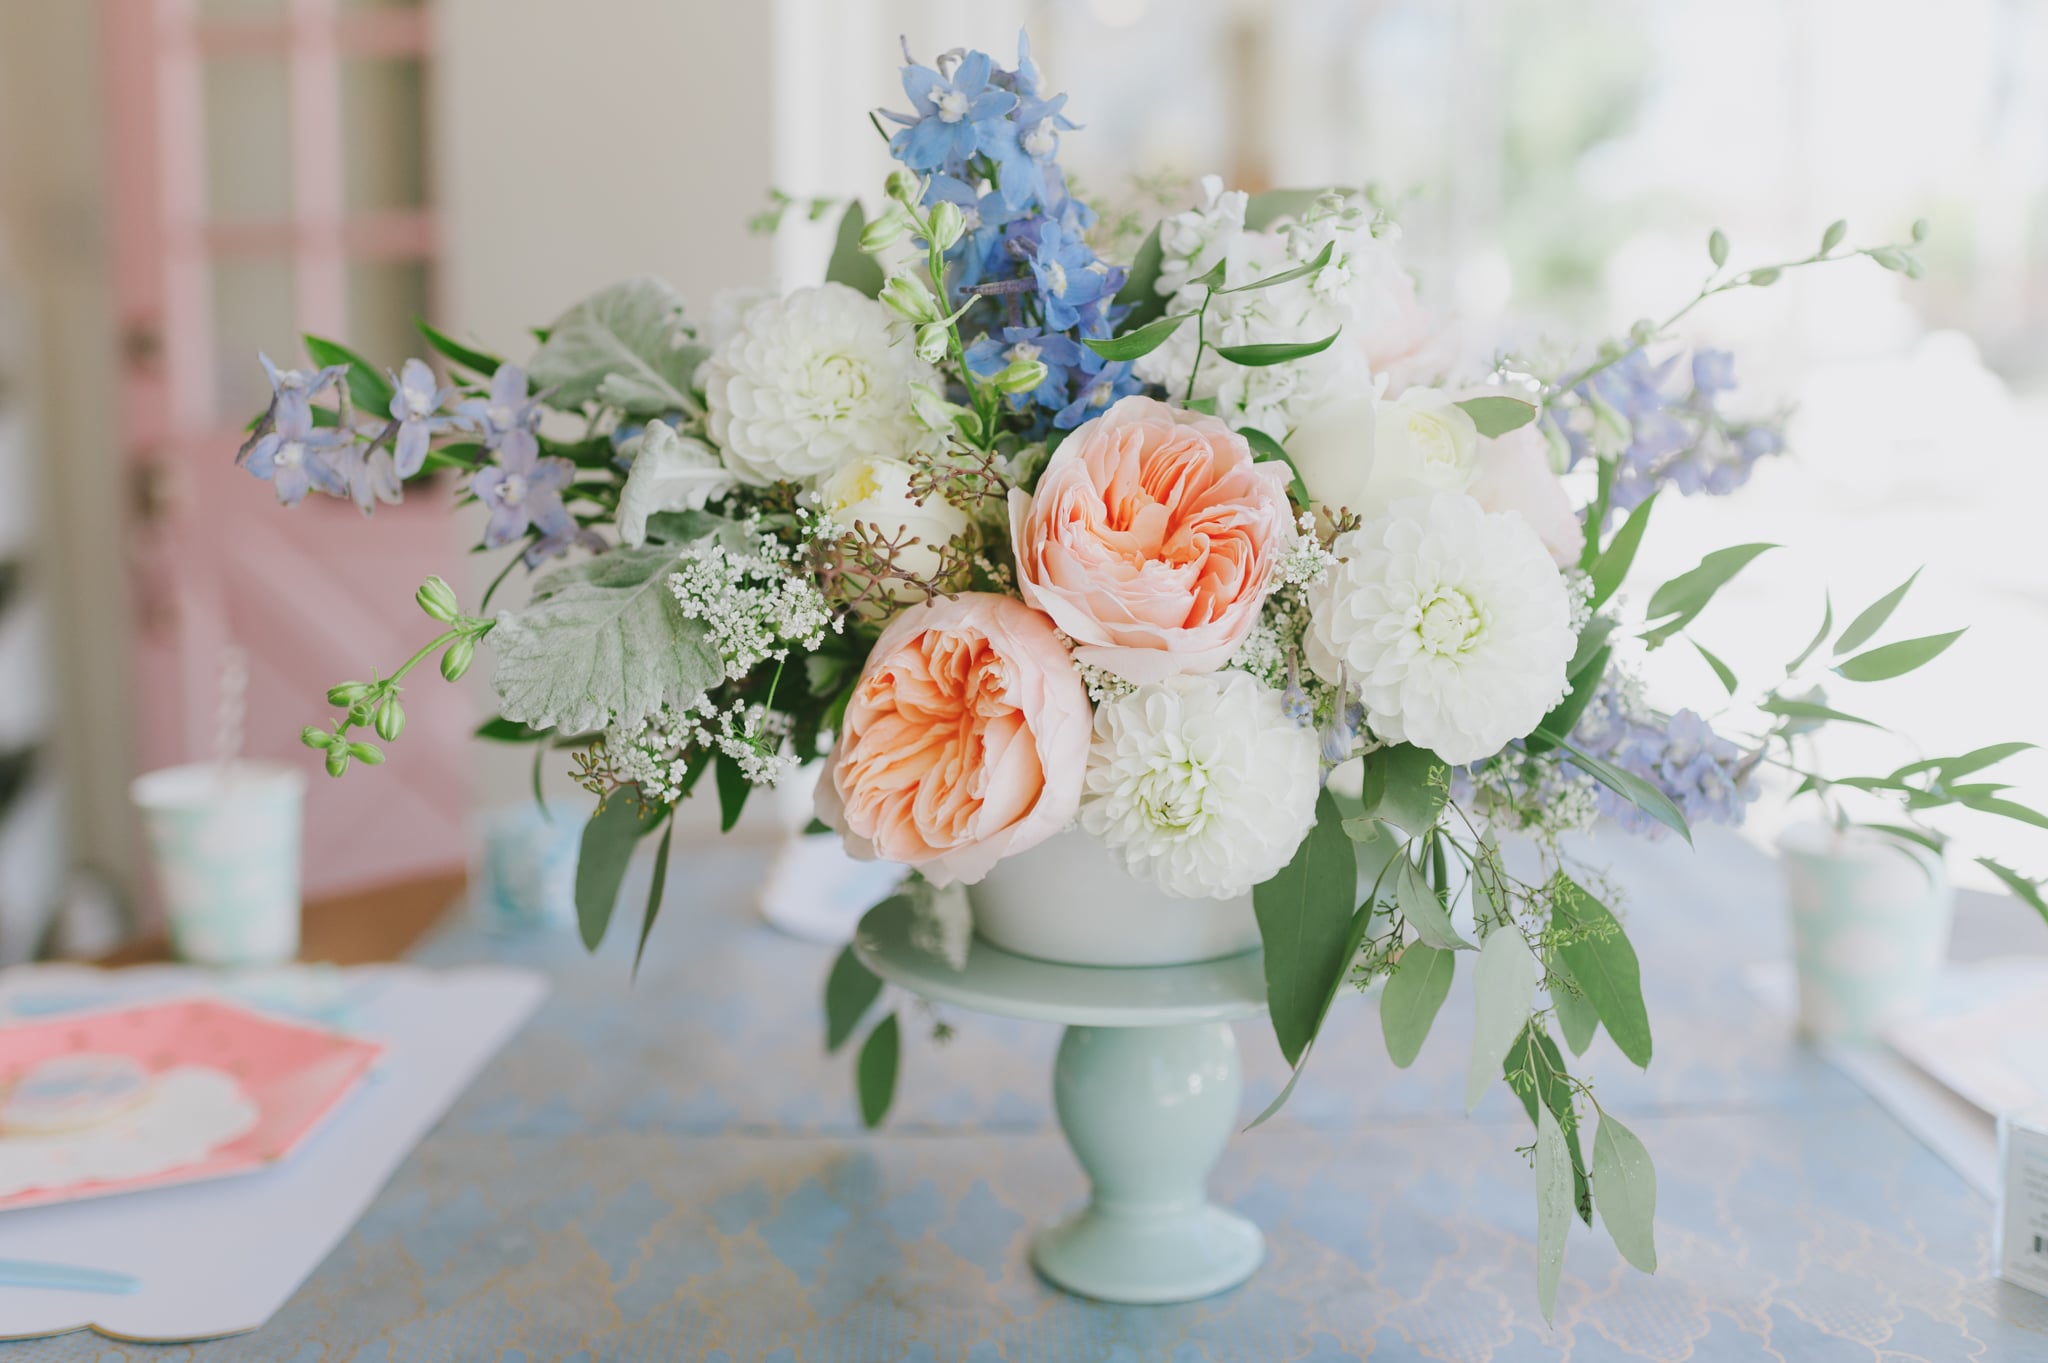 Pastel floral arrangement on mint cake stand - Project Nursery